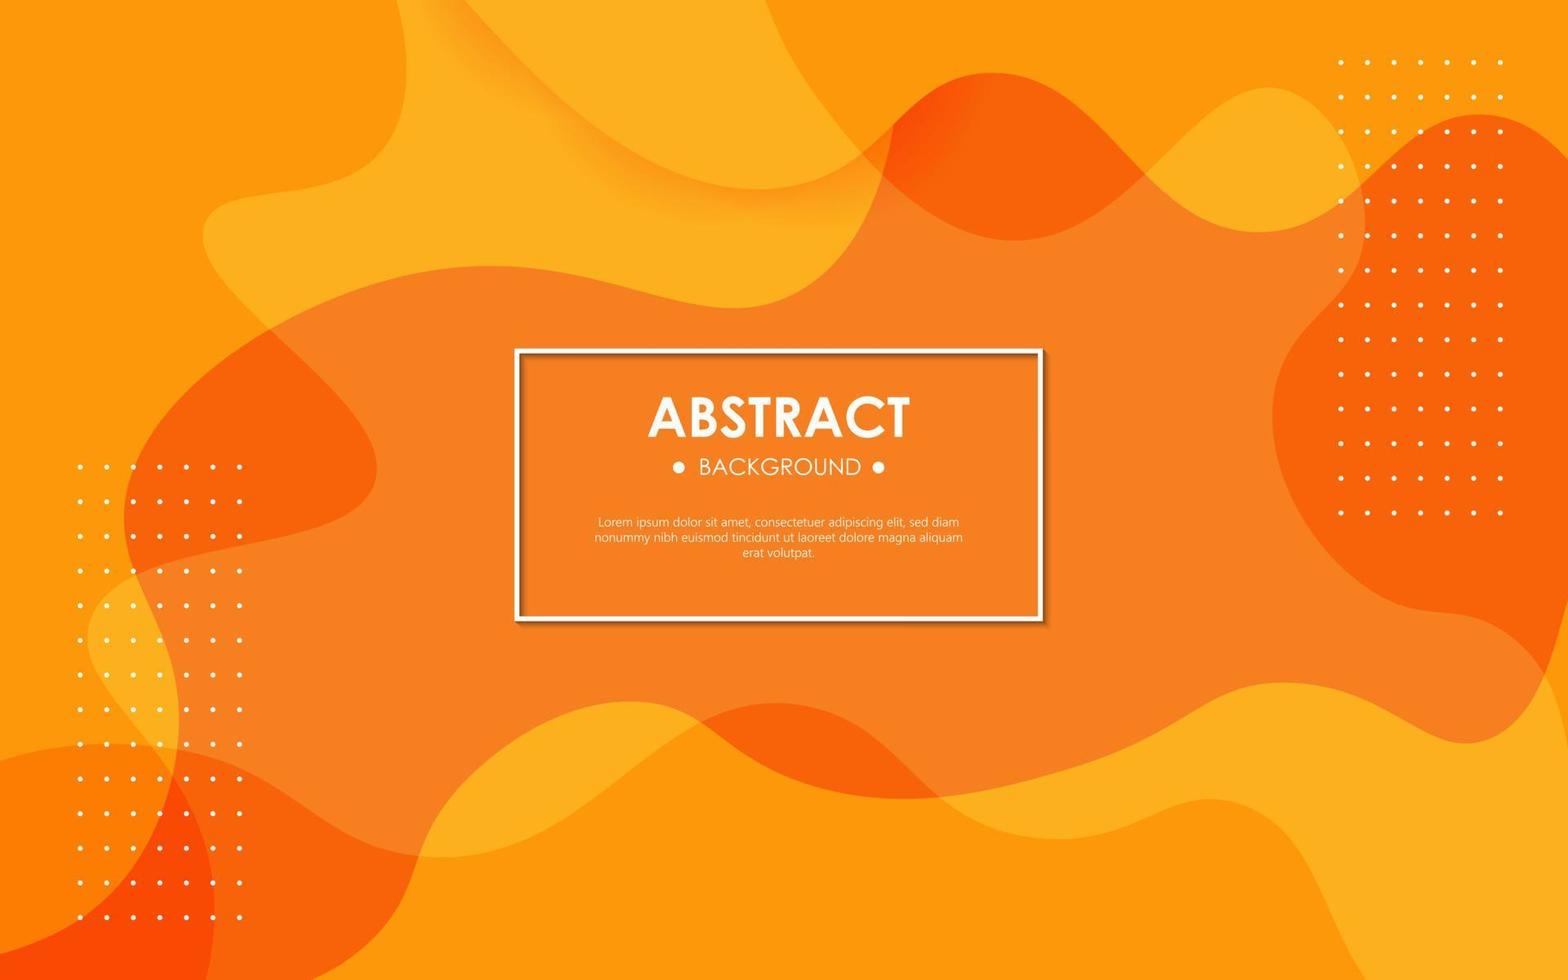 modern abstarct dynamisk orange vågig texturerad bakgrund design i 3d stil med orange Färg. eps10 vektor bakgrund.